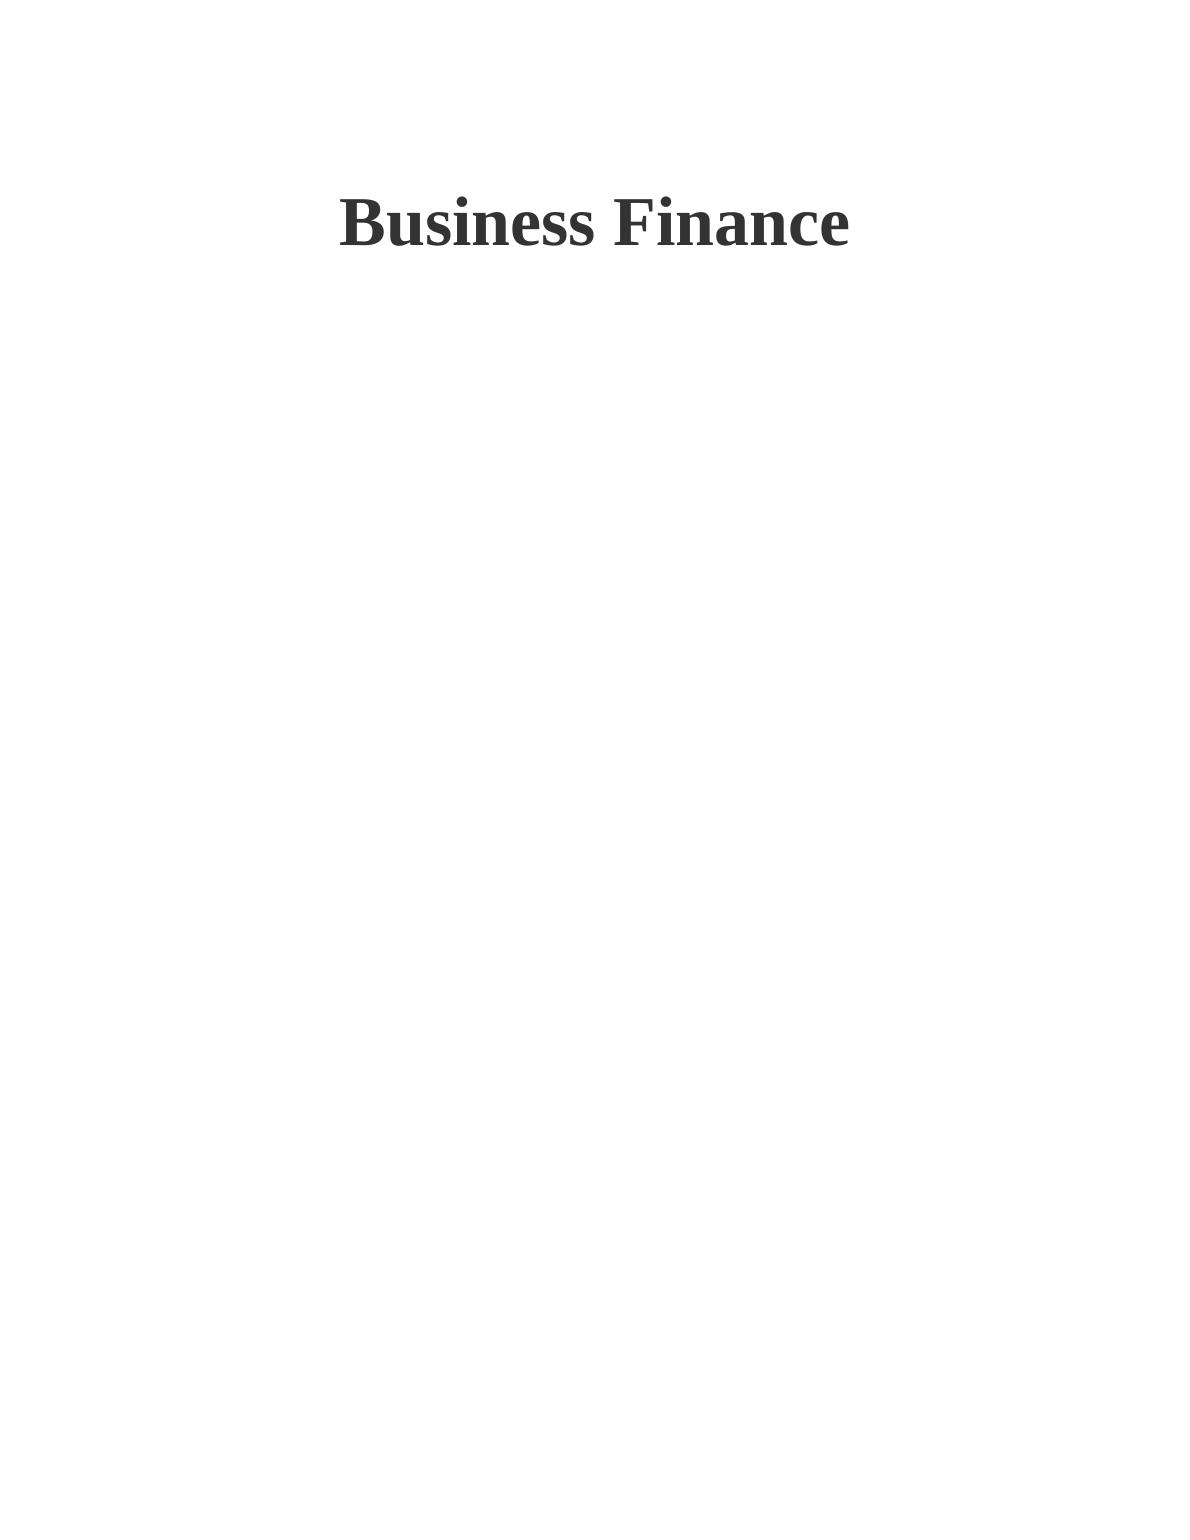 (PDF) Business Finance - Assignment_1